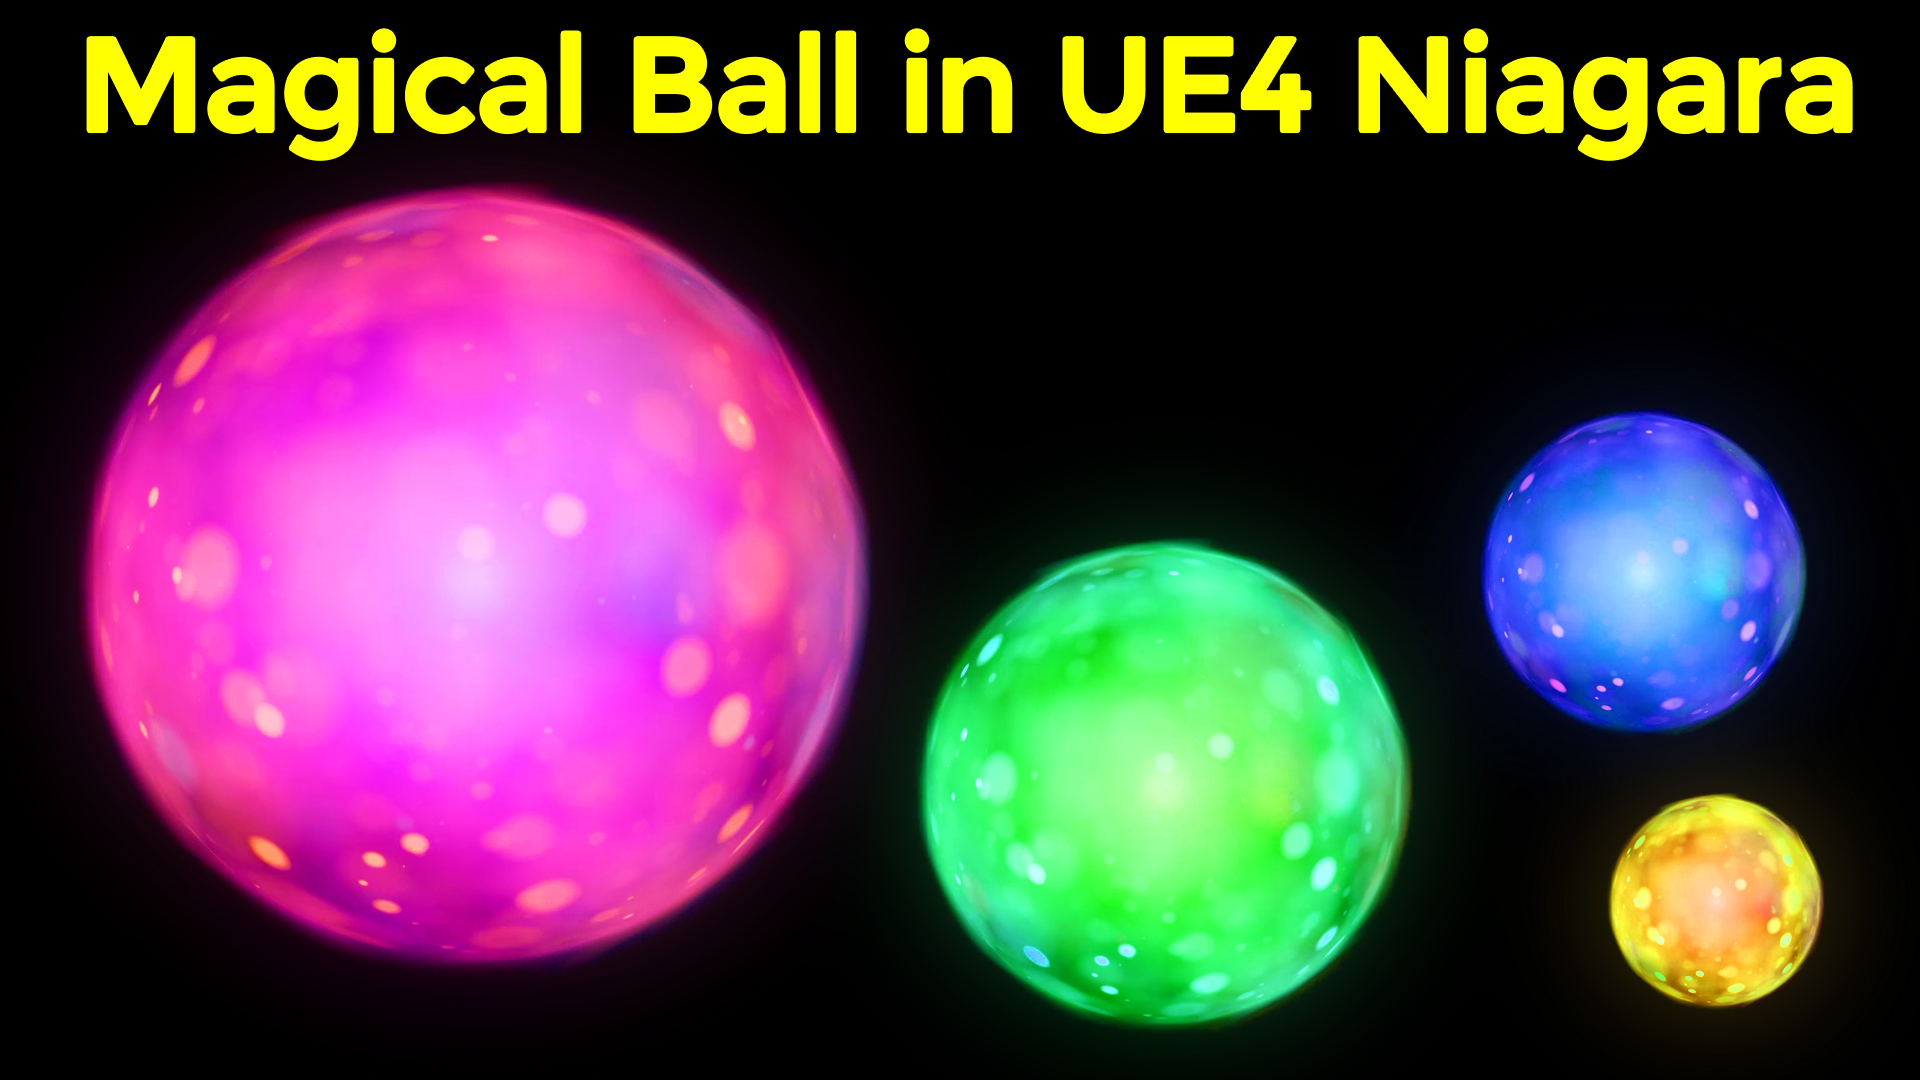 Magical Ball in UE4 Niagara for my Patreons